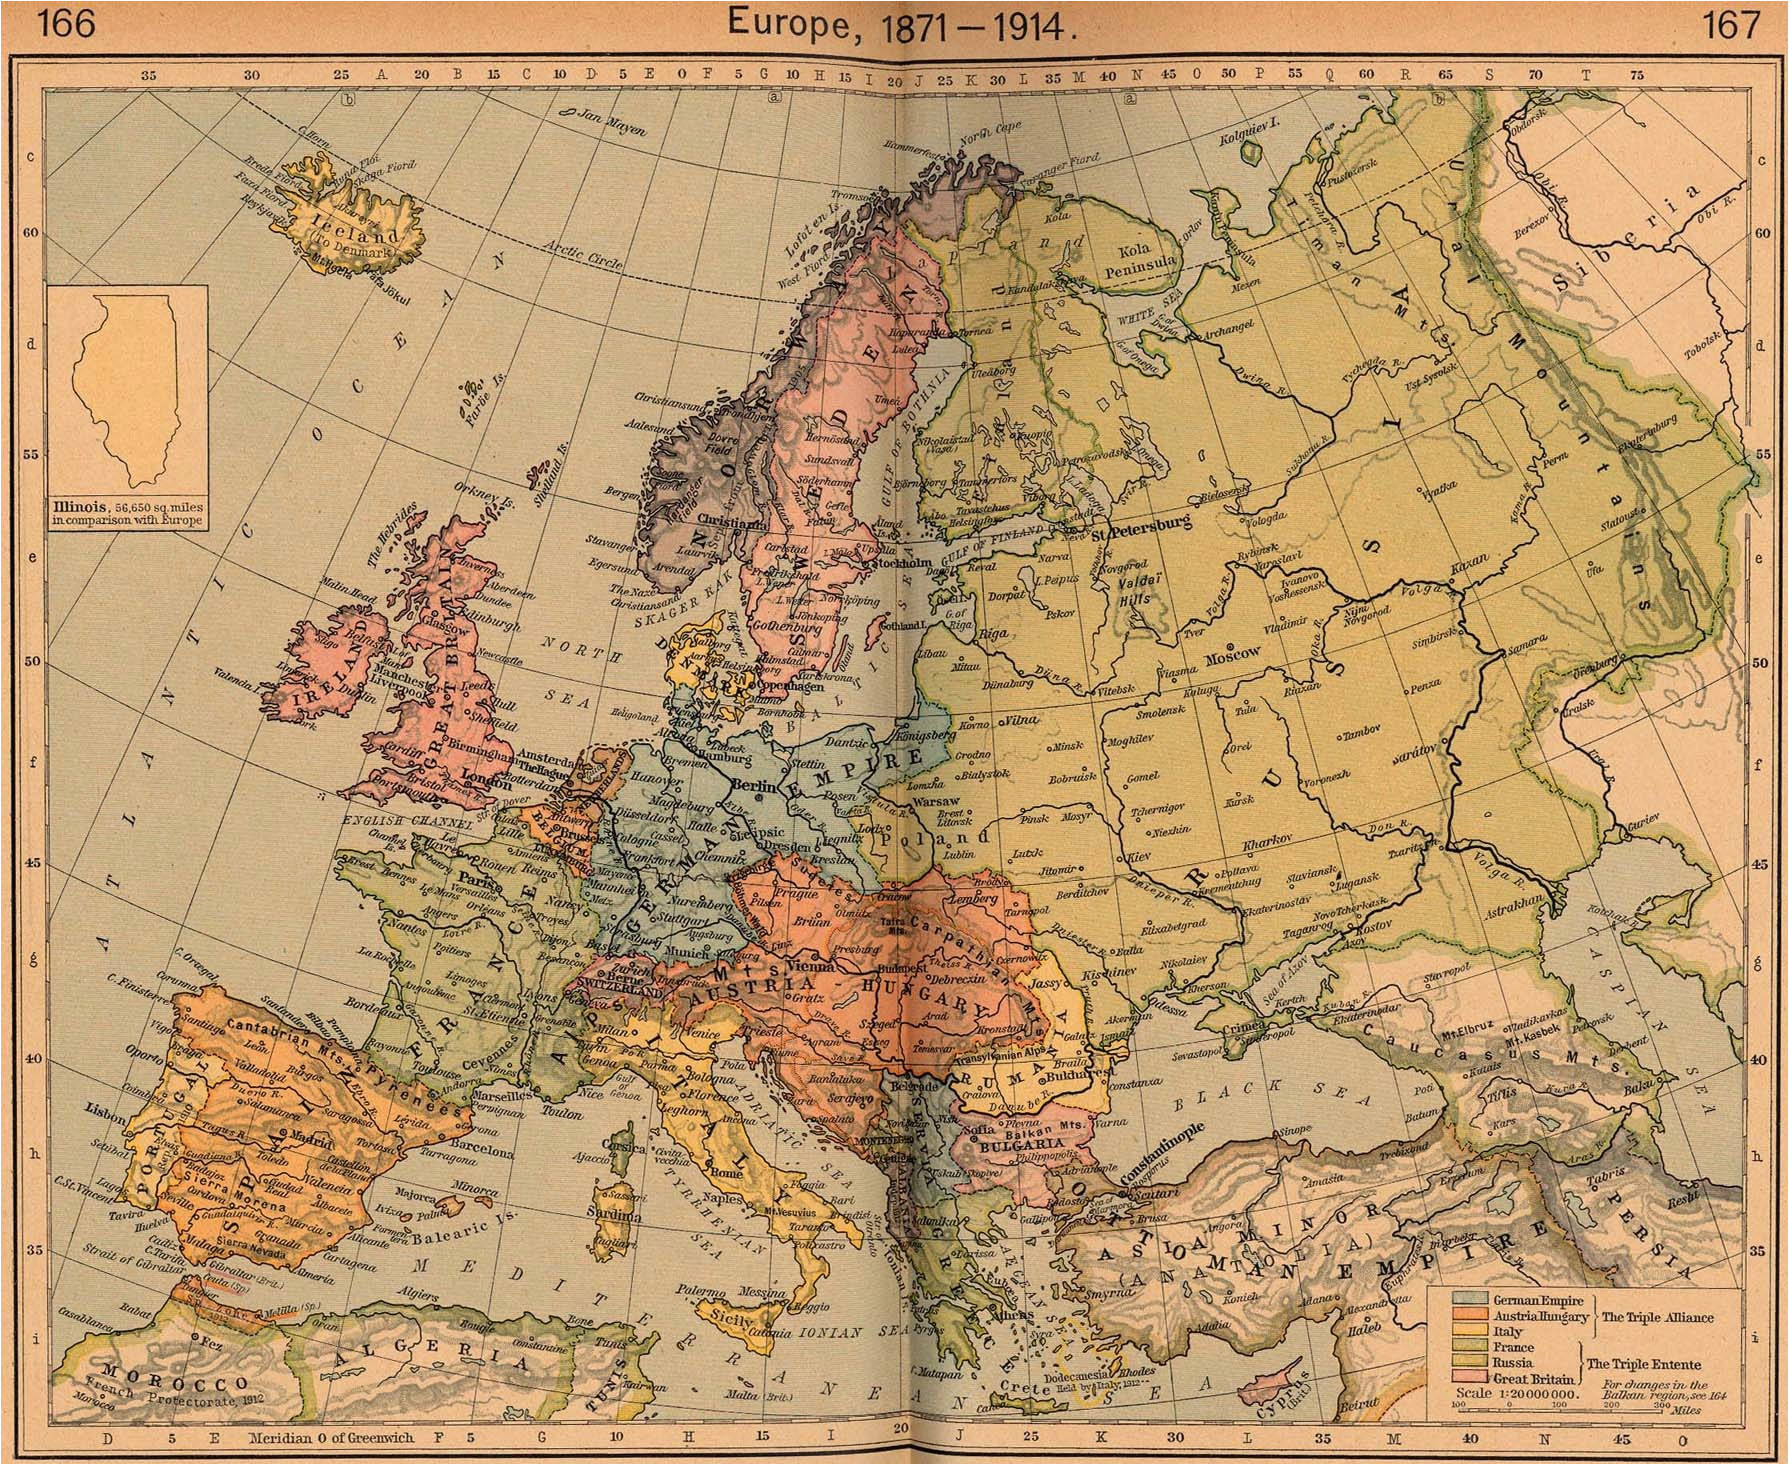 history 464 europe since 1914 unlv